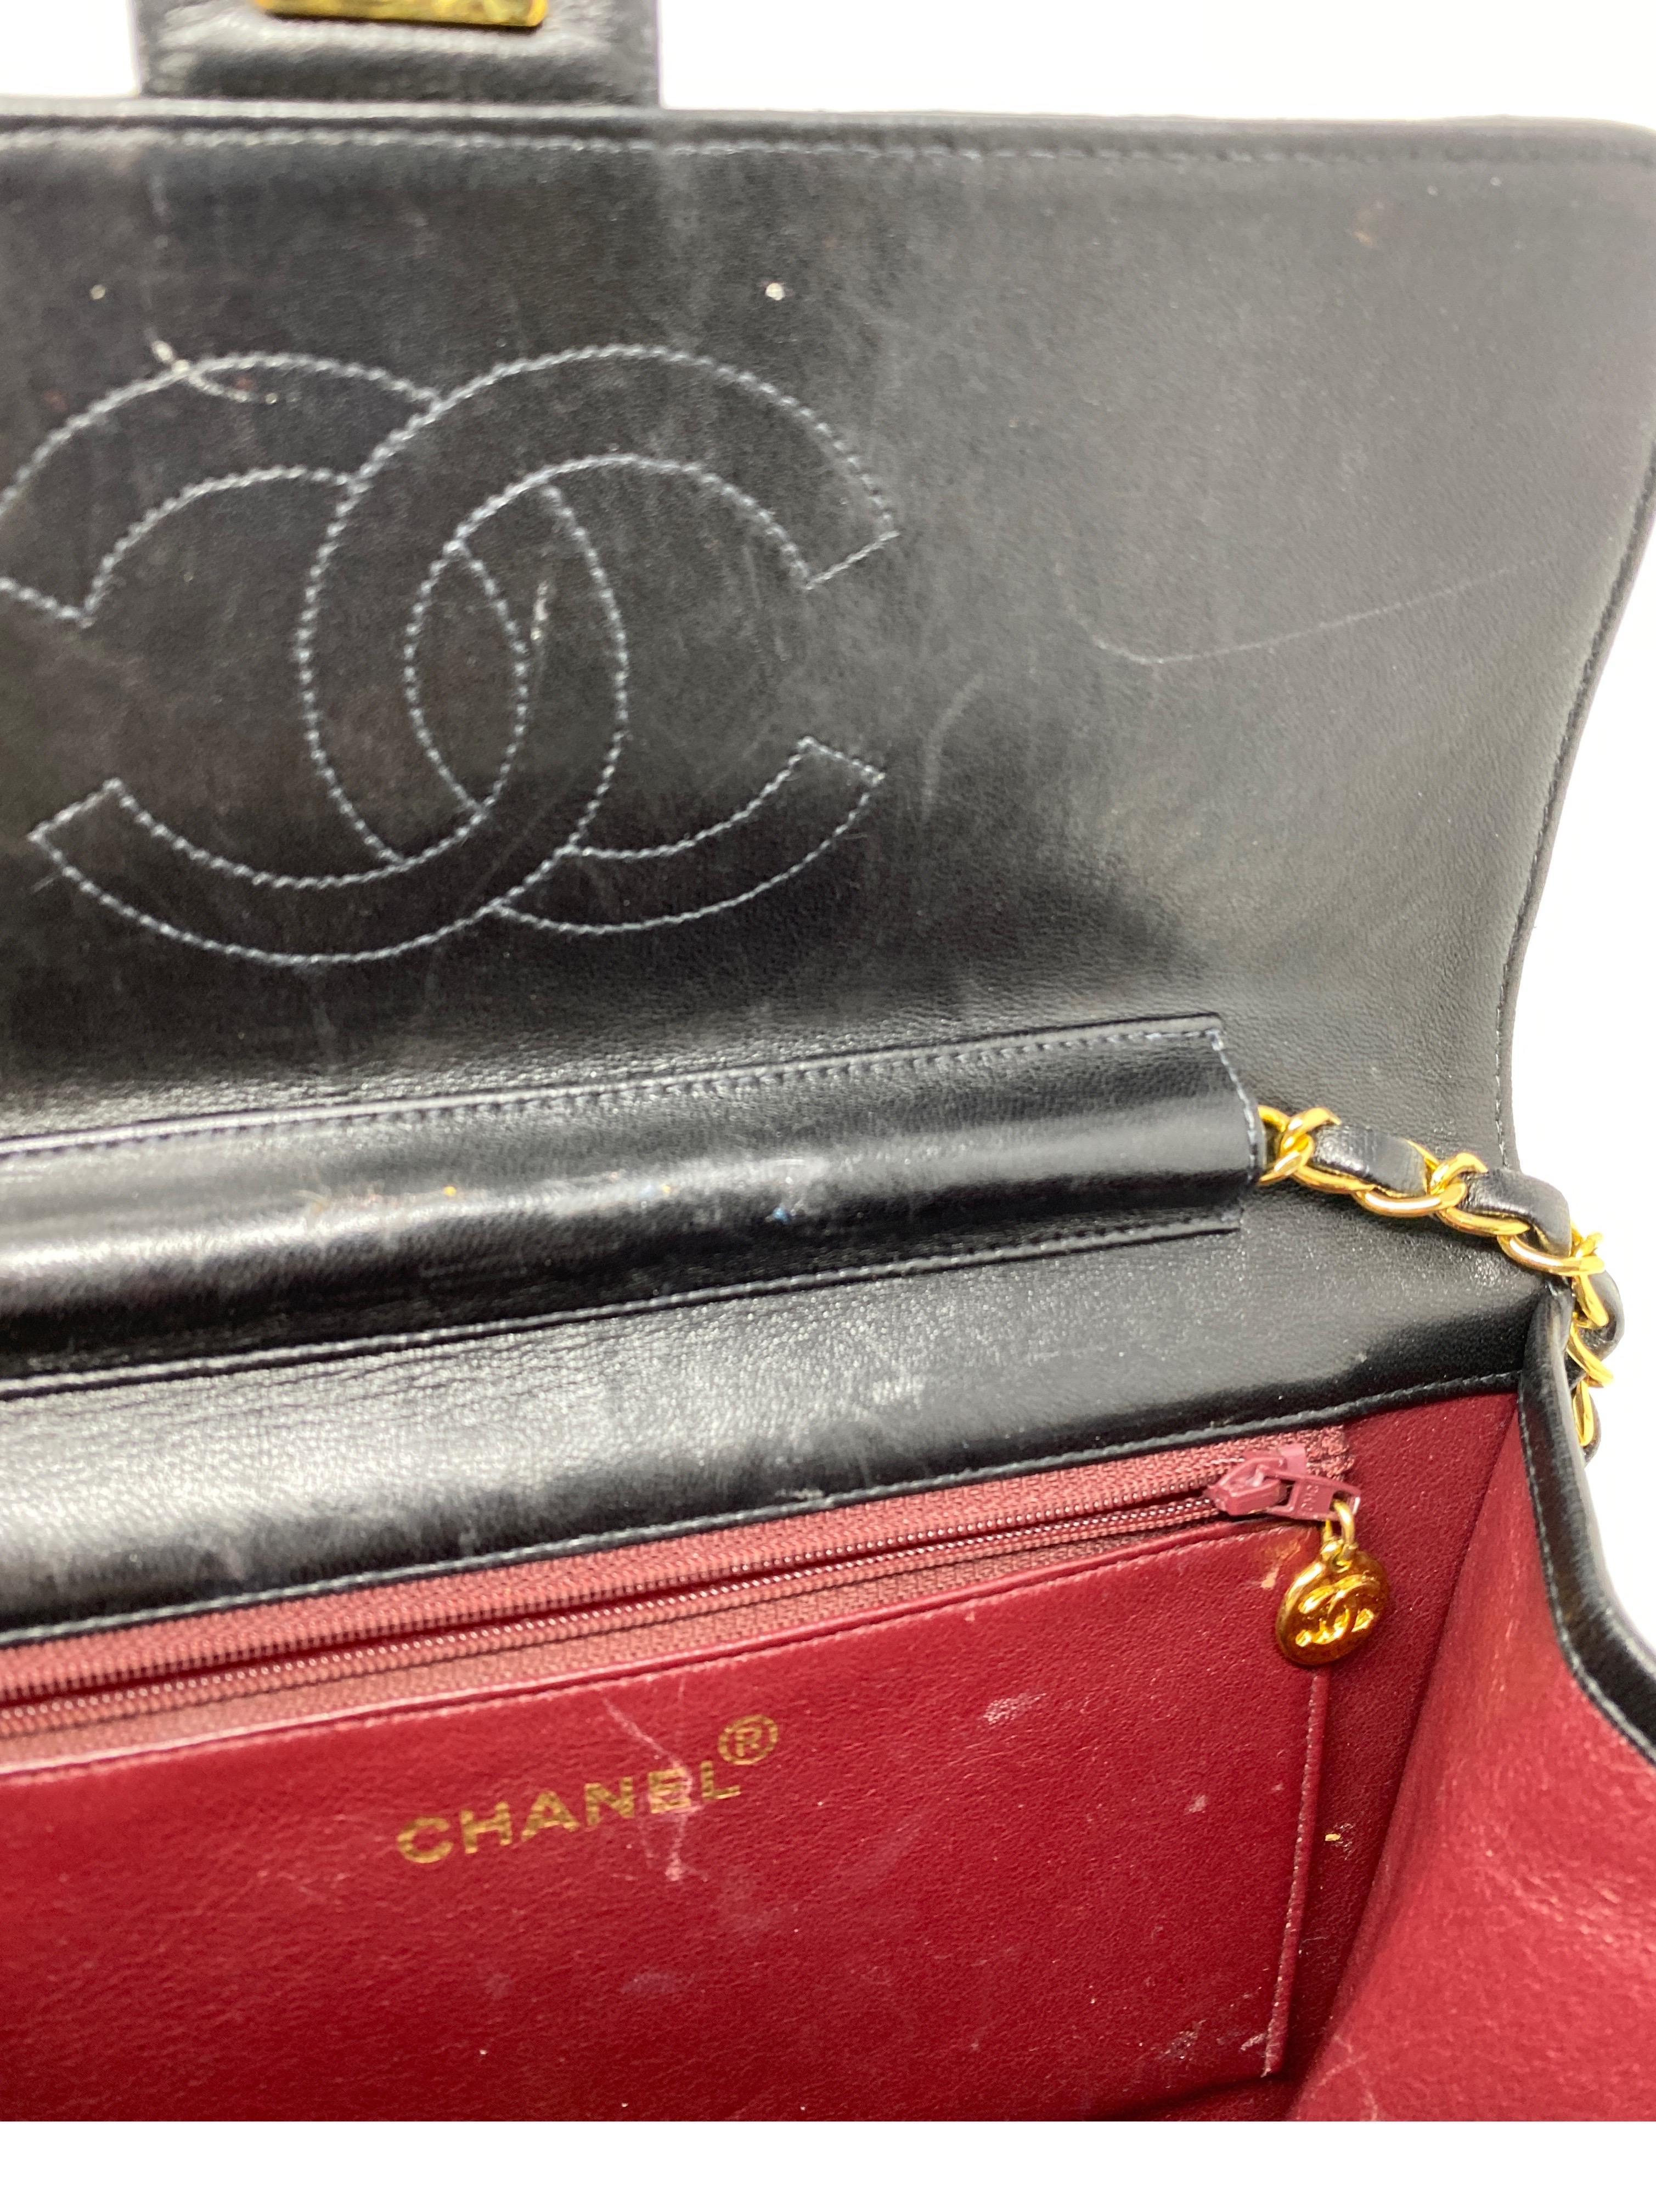 Chanel Black Clutch Bag Chain Strap 4